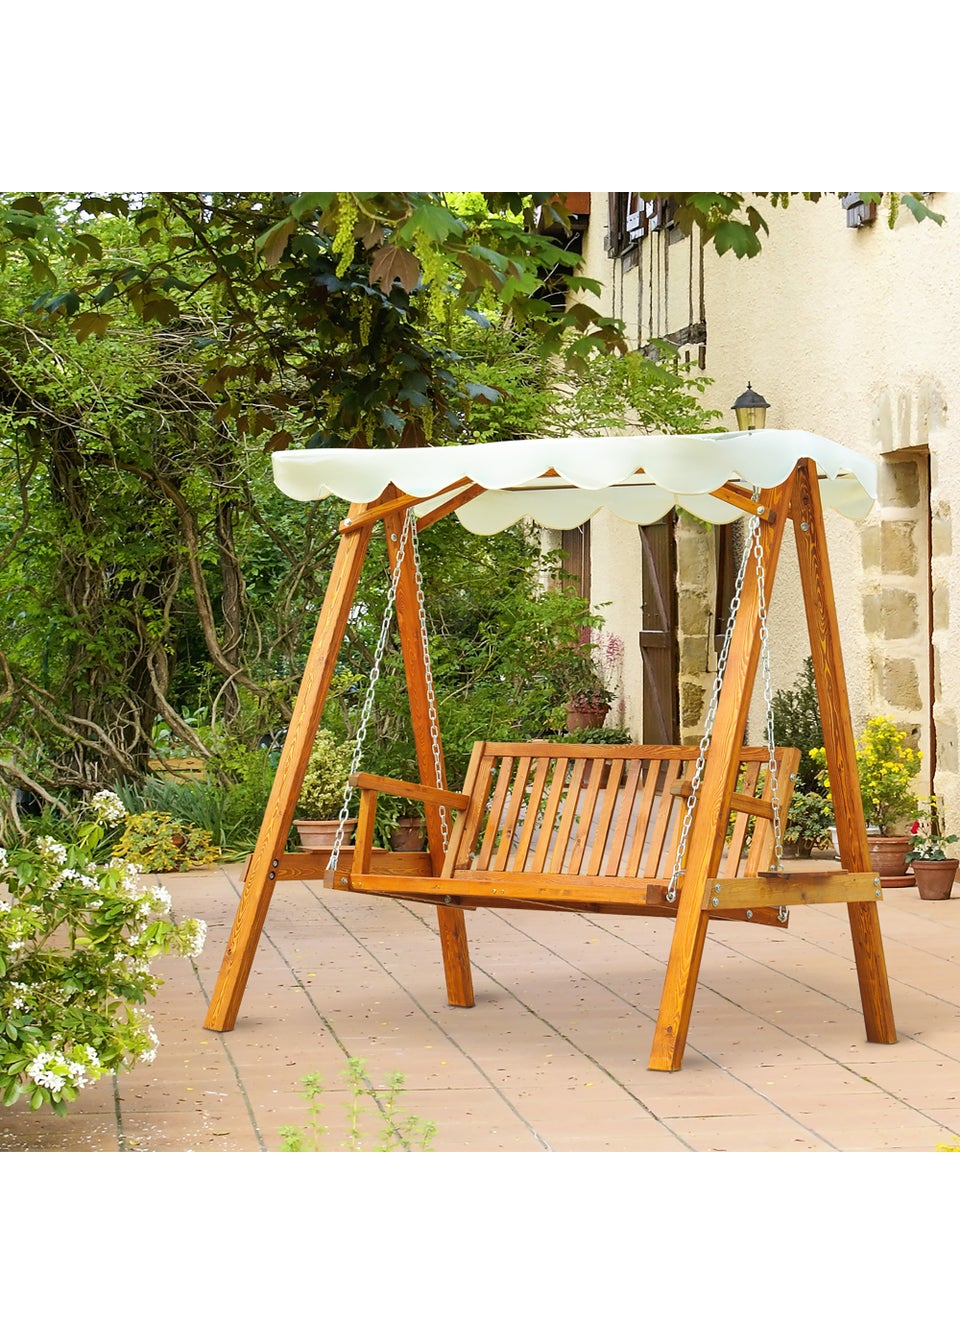 Outsunny Cream 2 Seater Wooden Garden Swing Chair (162cm x 130cm x 185cm)